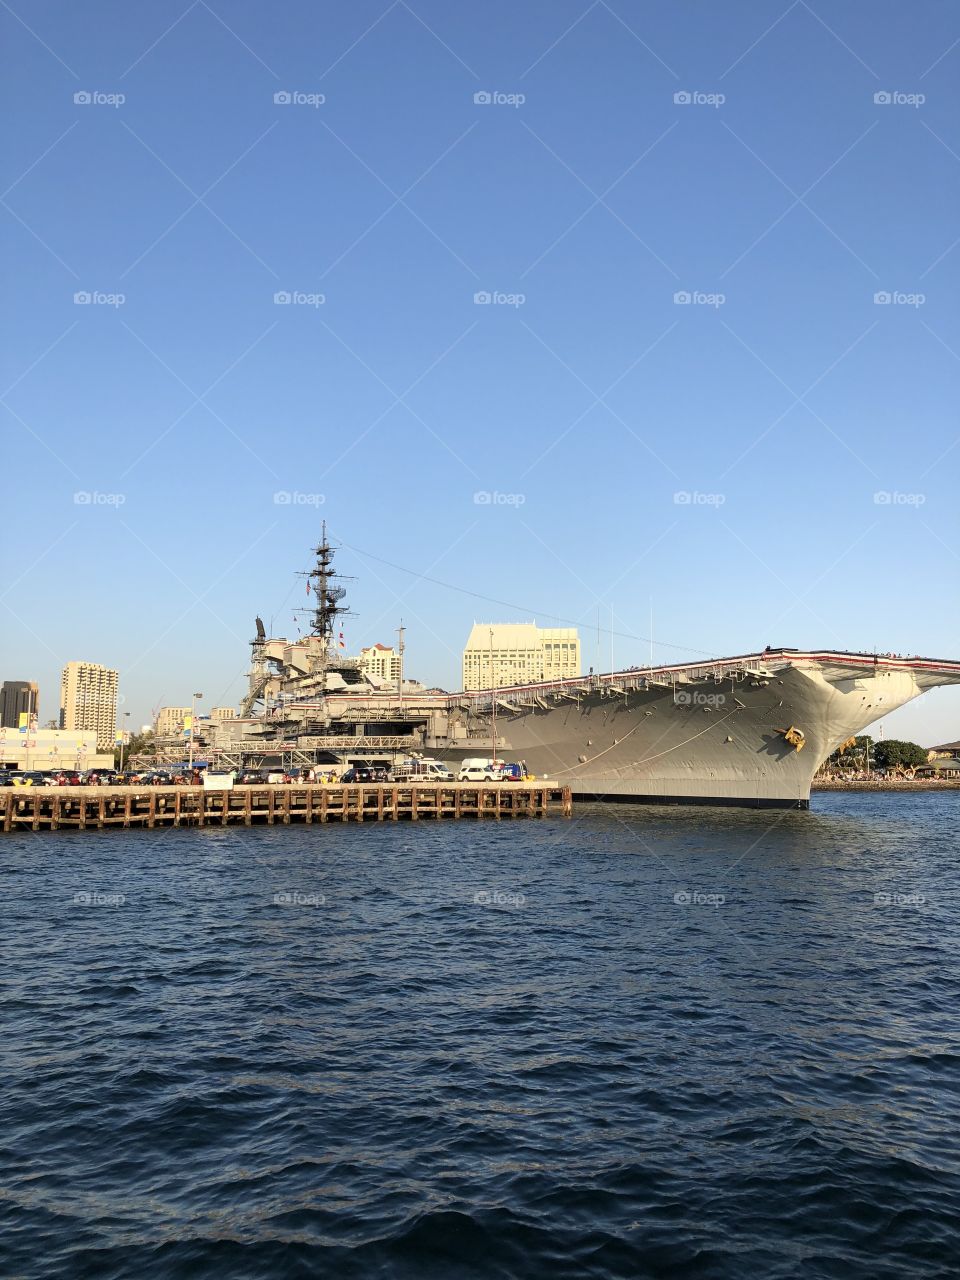 Us ship San Diego Harbor 2019